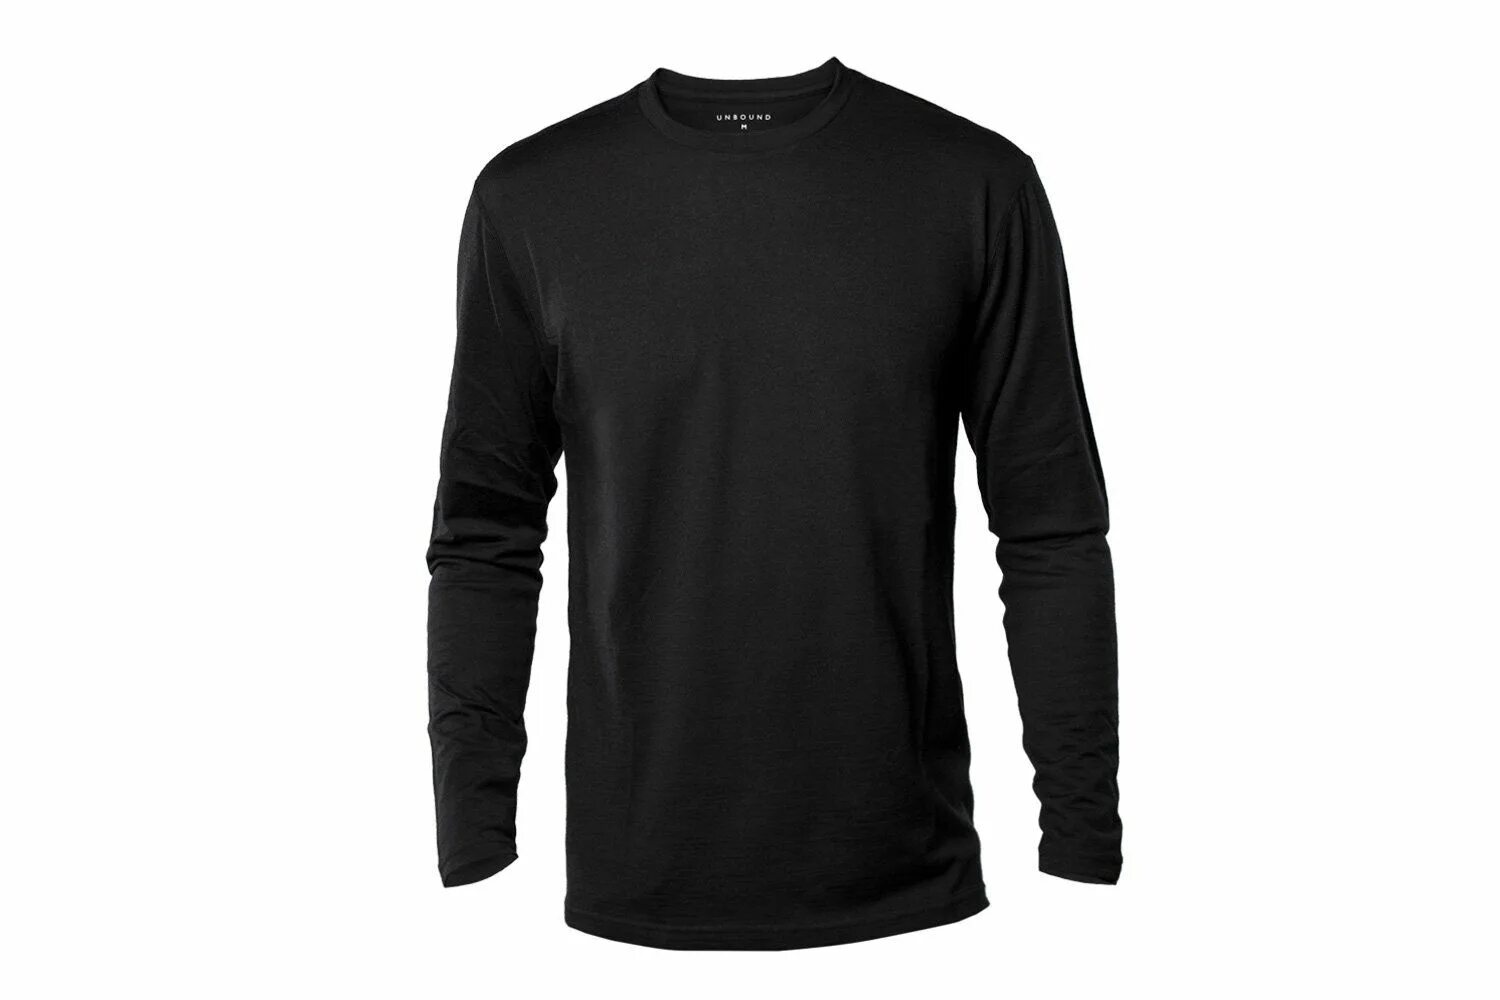 Long sleeved t shirt. Long Sleeve t-Shirt Black. Men Black long Sleeve Shirt. Футболка long Sleeve. All Black Shirt long Sleeve.